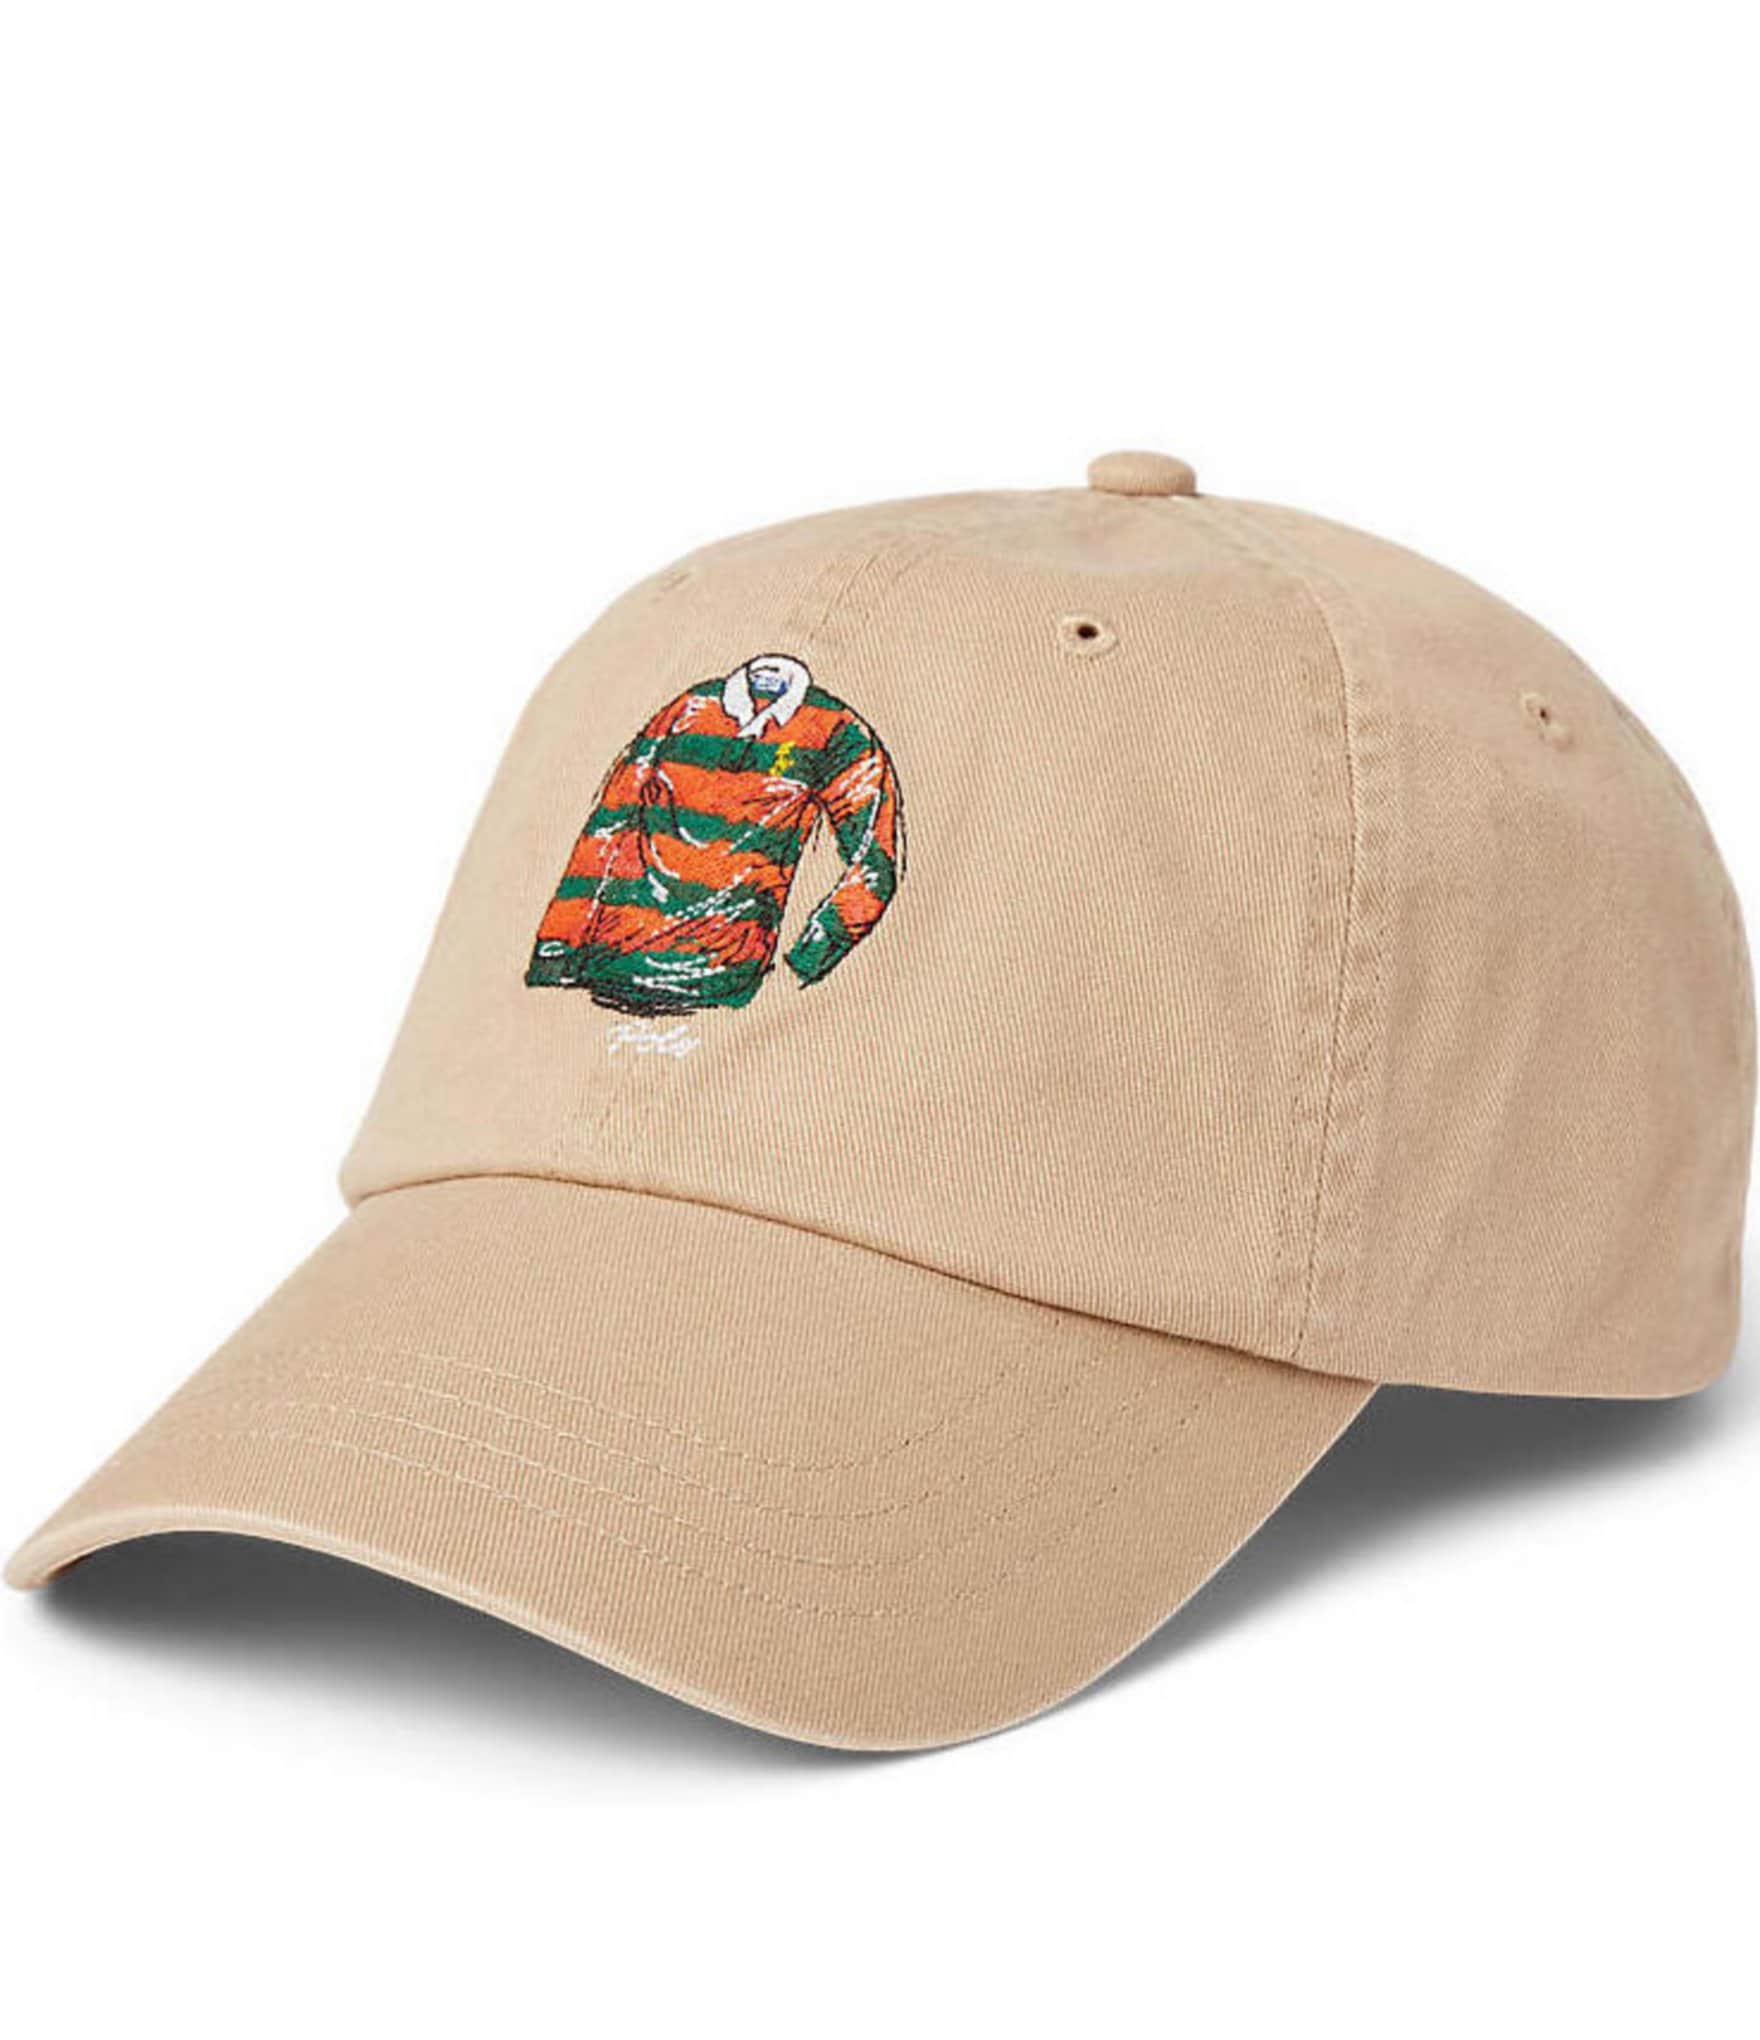 Lauren Ralph Lauren Greek Fisherman Hat With Leather Brim, $58, Dillard's